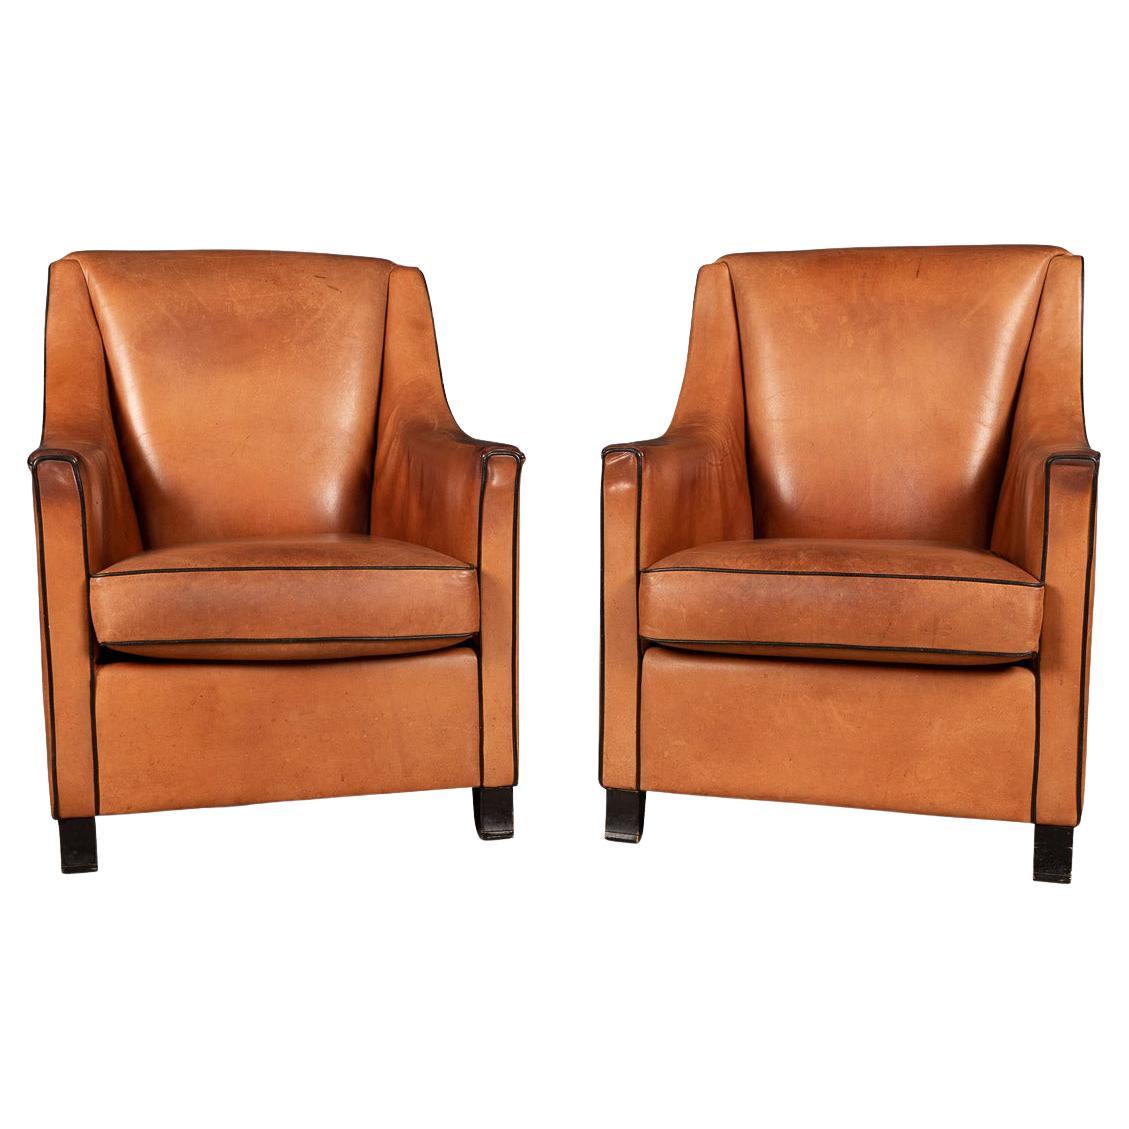 20th Century Pair of Art Deco Style Dutch Sheepskin Leather Club Chairs